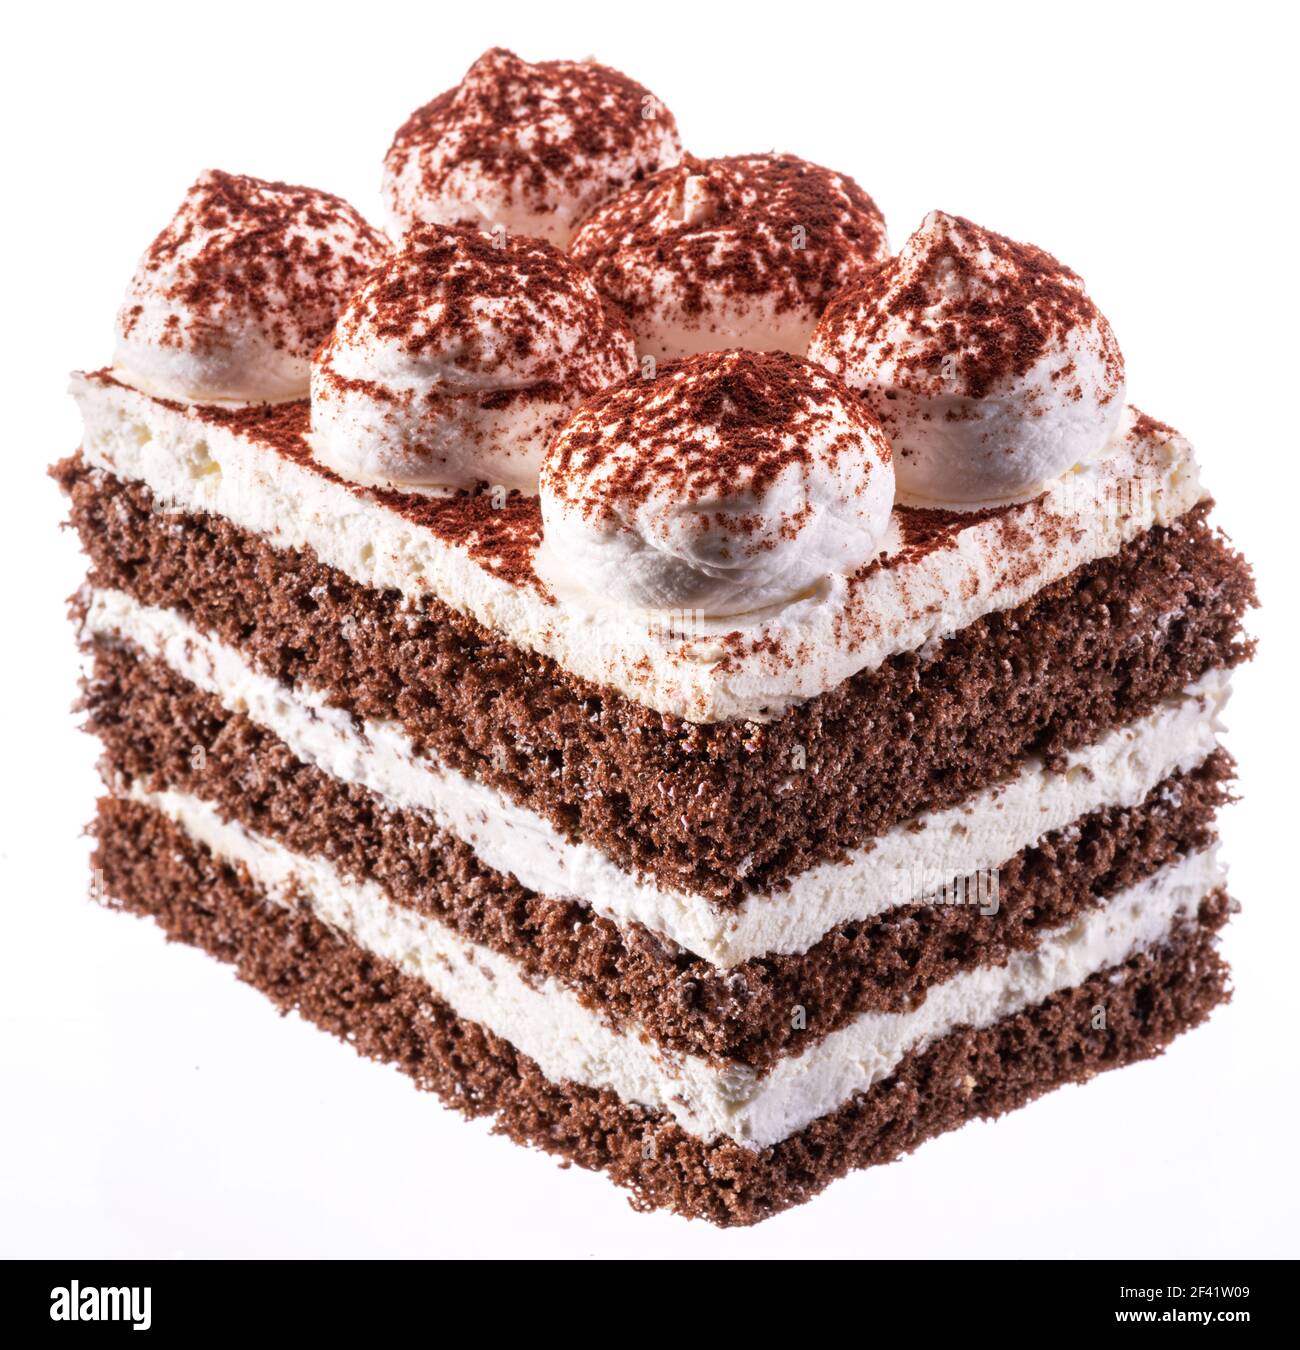 Slice of chocolate cake with tiramisu cream and cocoa powder isolated on  white background Stock Photo - Alamy